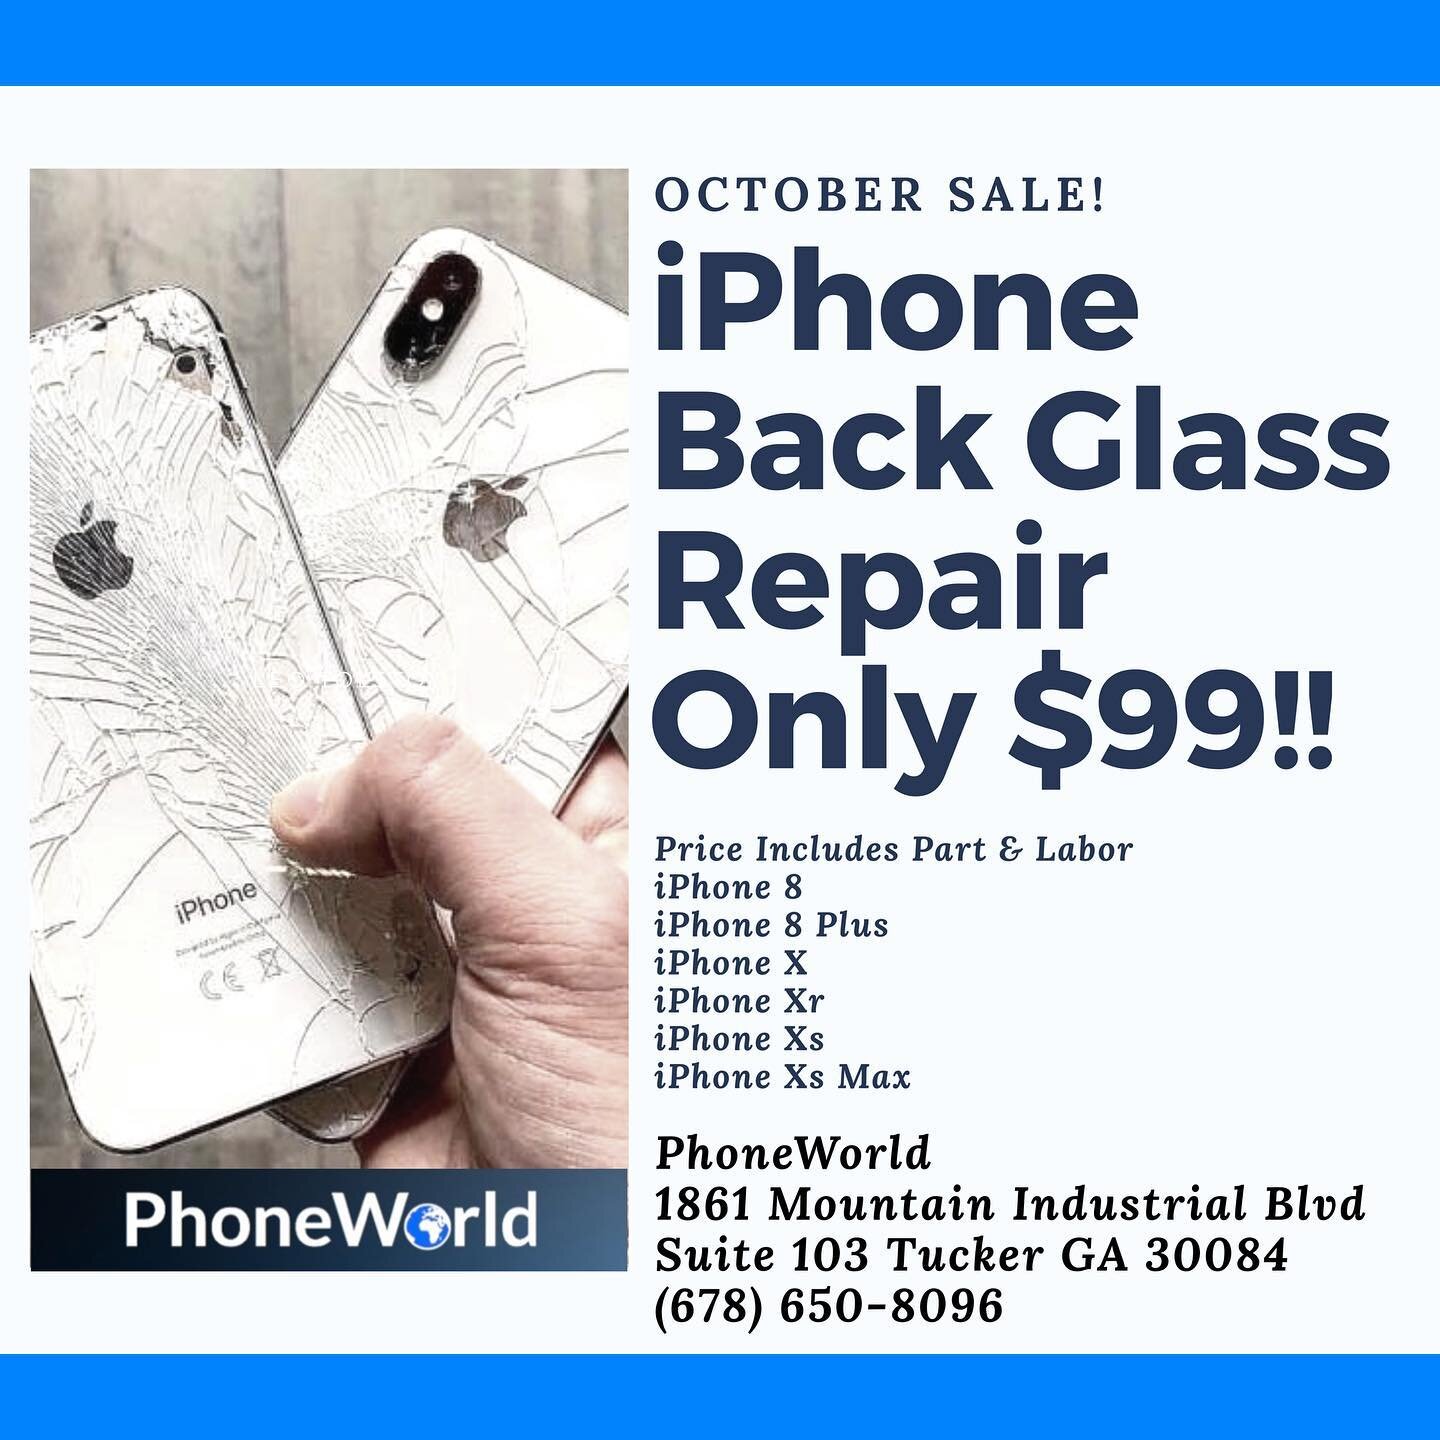 #iPhonebackglassrepair #atlantacellphones #atlantacellphonerepair #phoneworld #phoneworldtucker #tuckerga